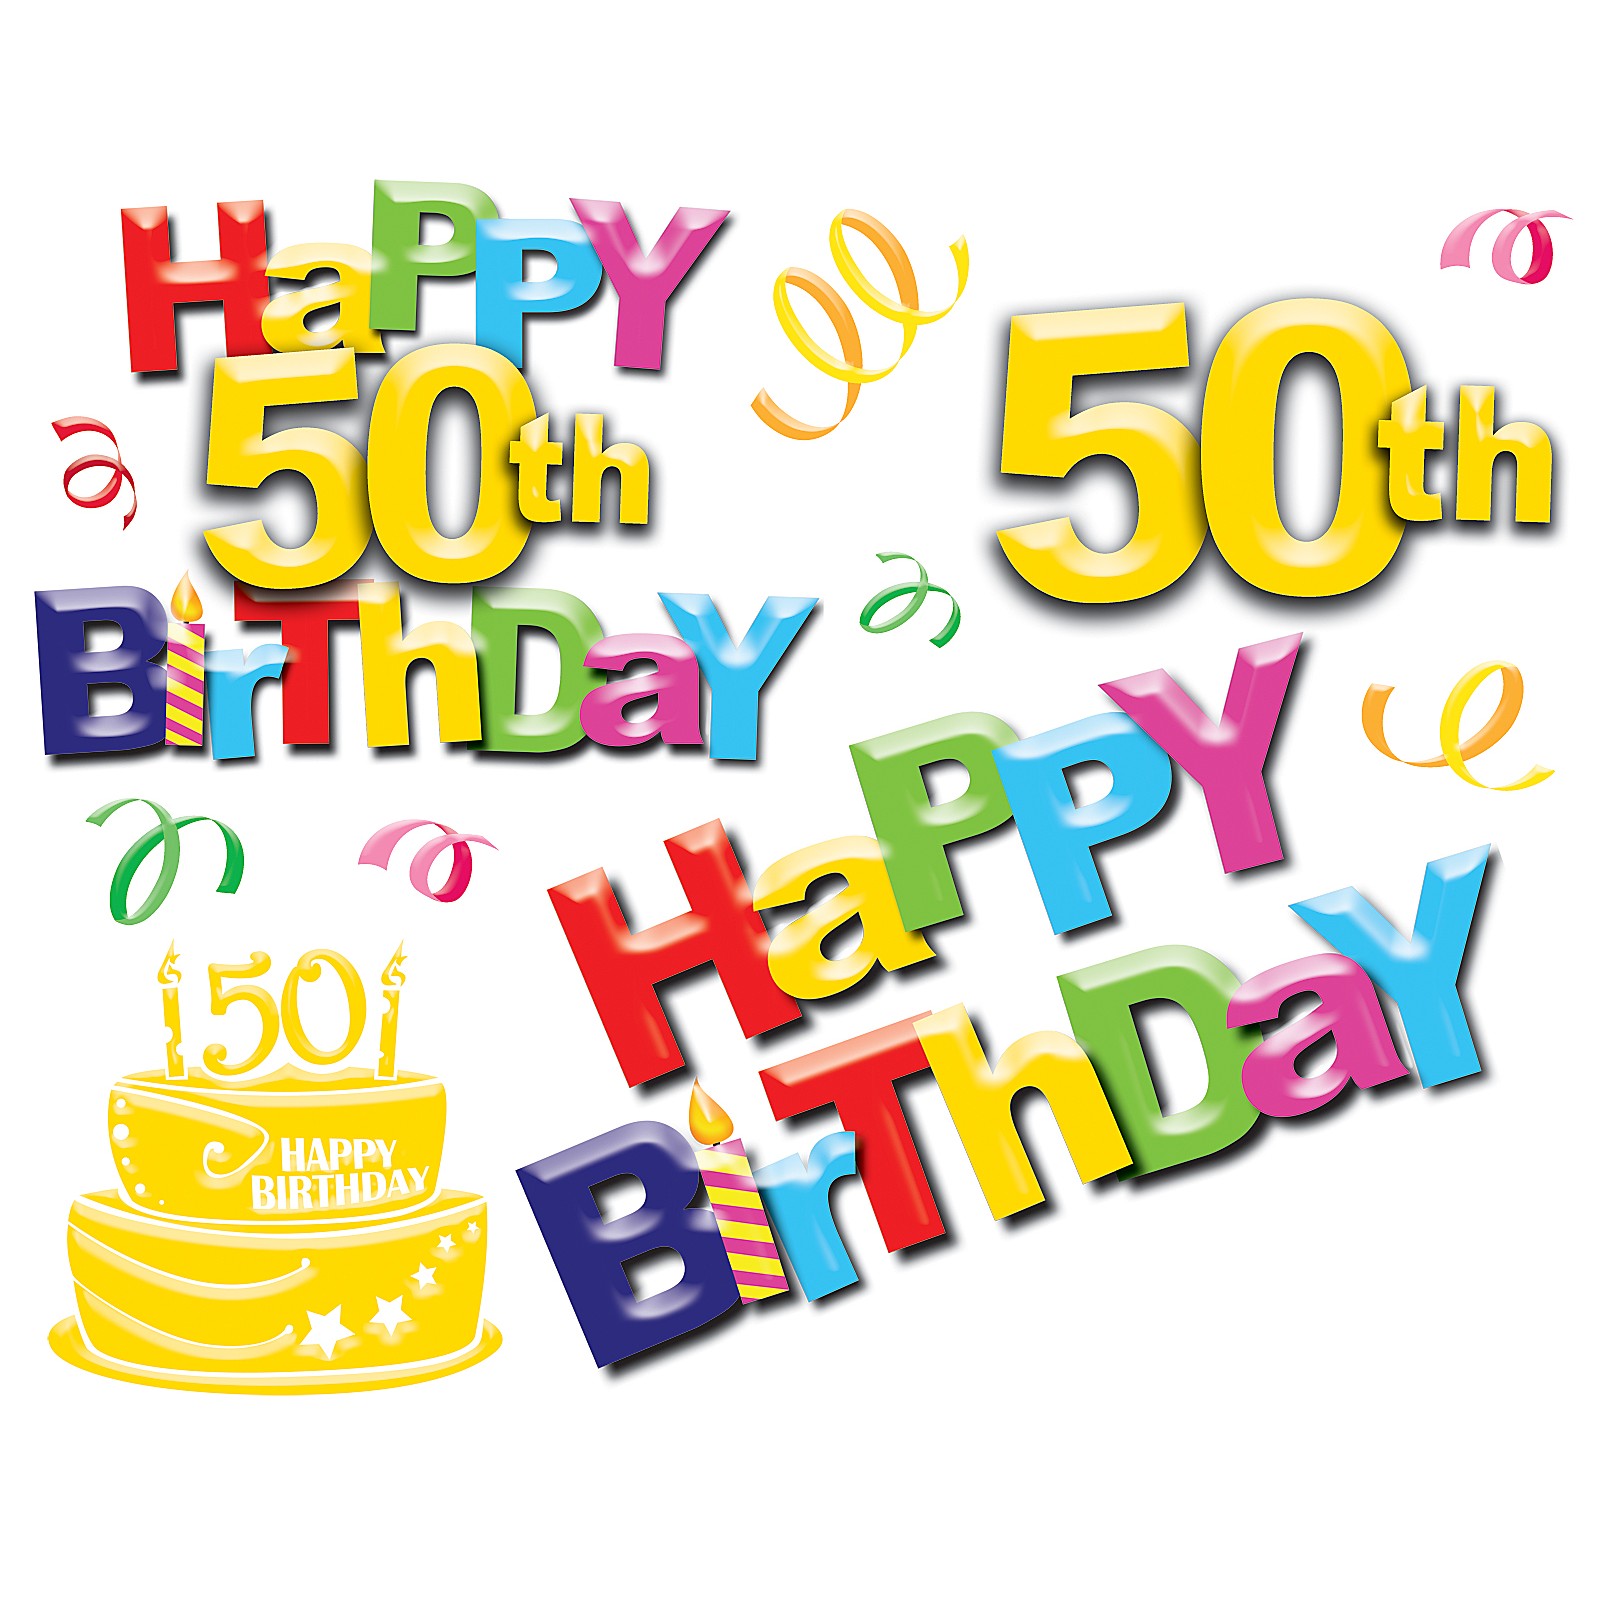 Happy 50th Birthday Clip Art   Clipart Best